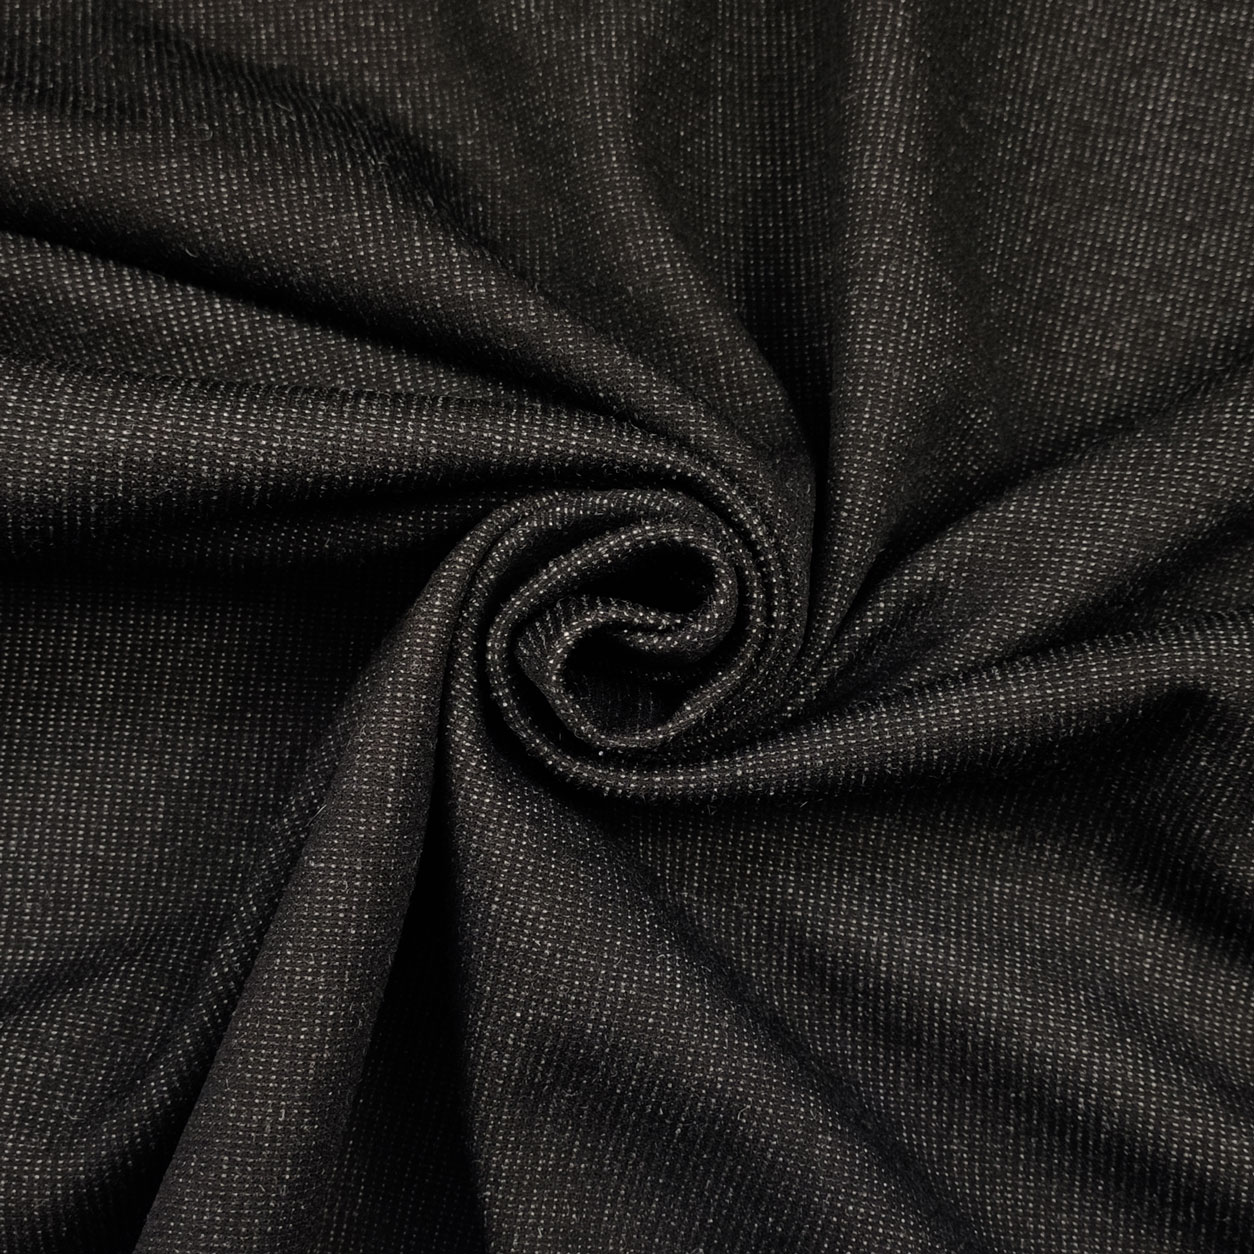 maglia garzata nera e panna